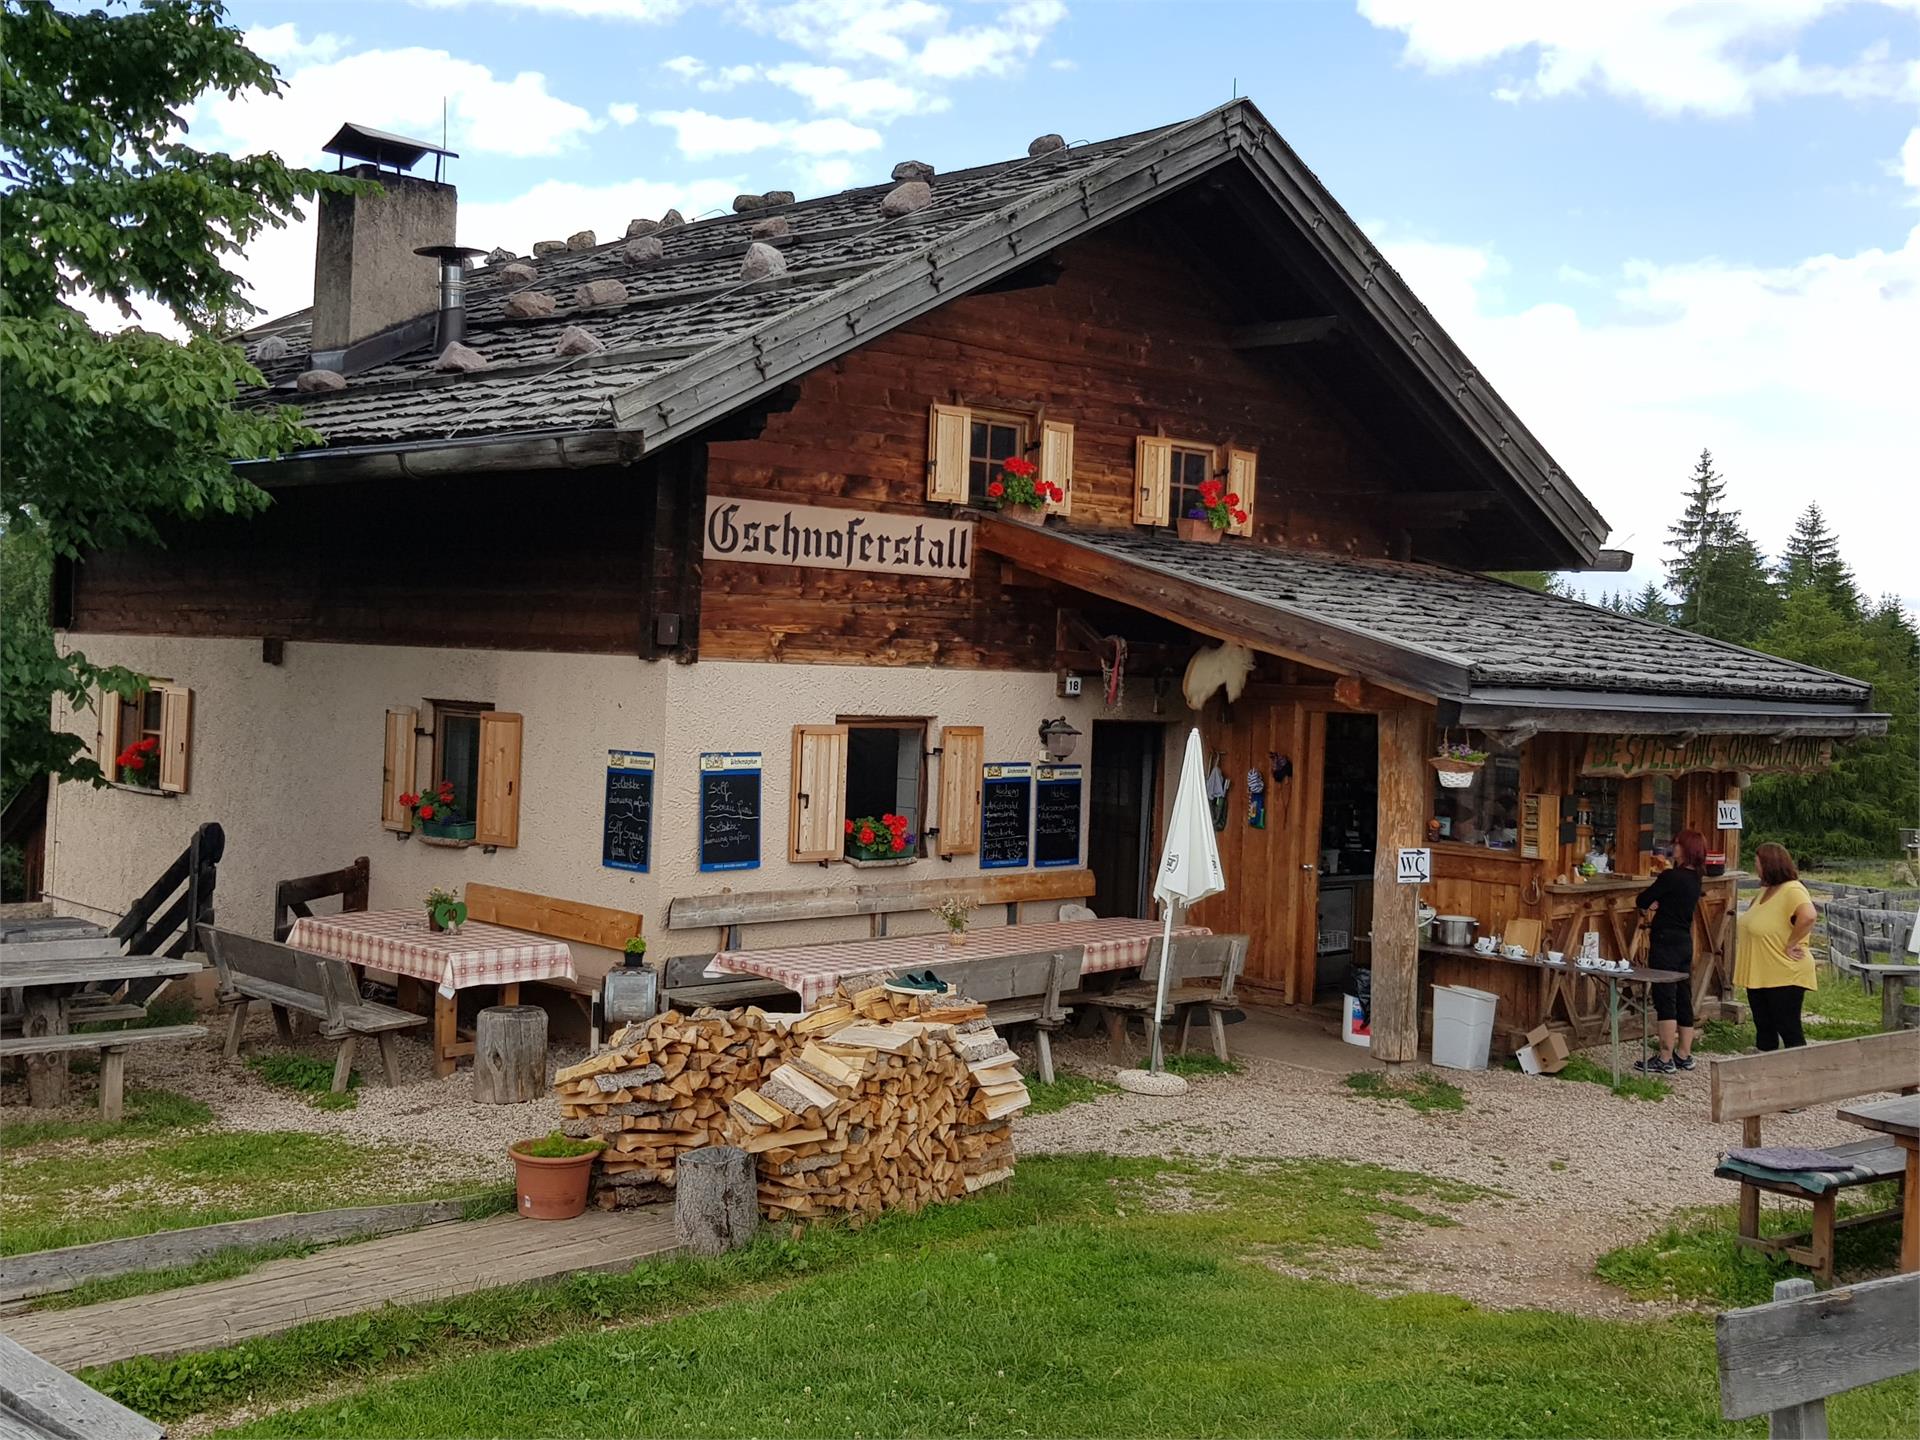 Gasthaus Edelweiß - Gschnofer Stall